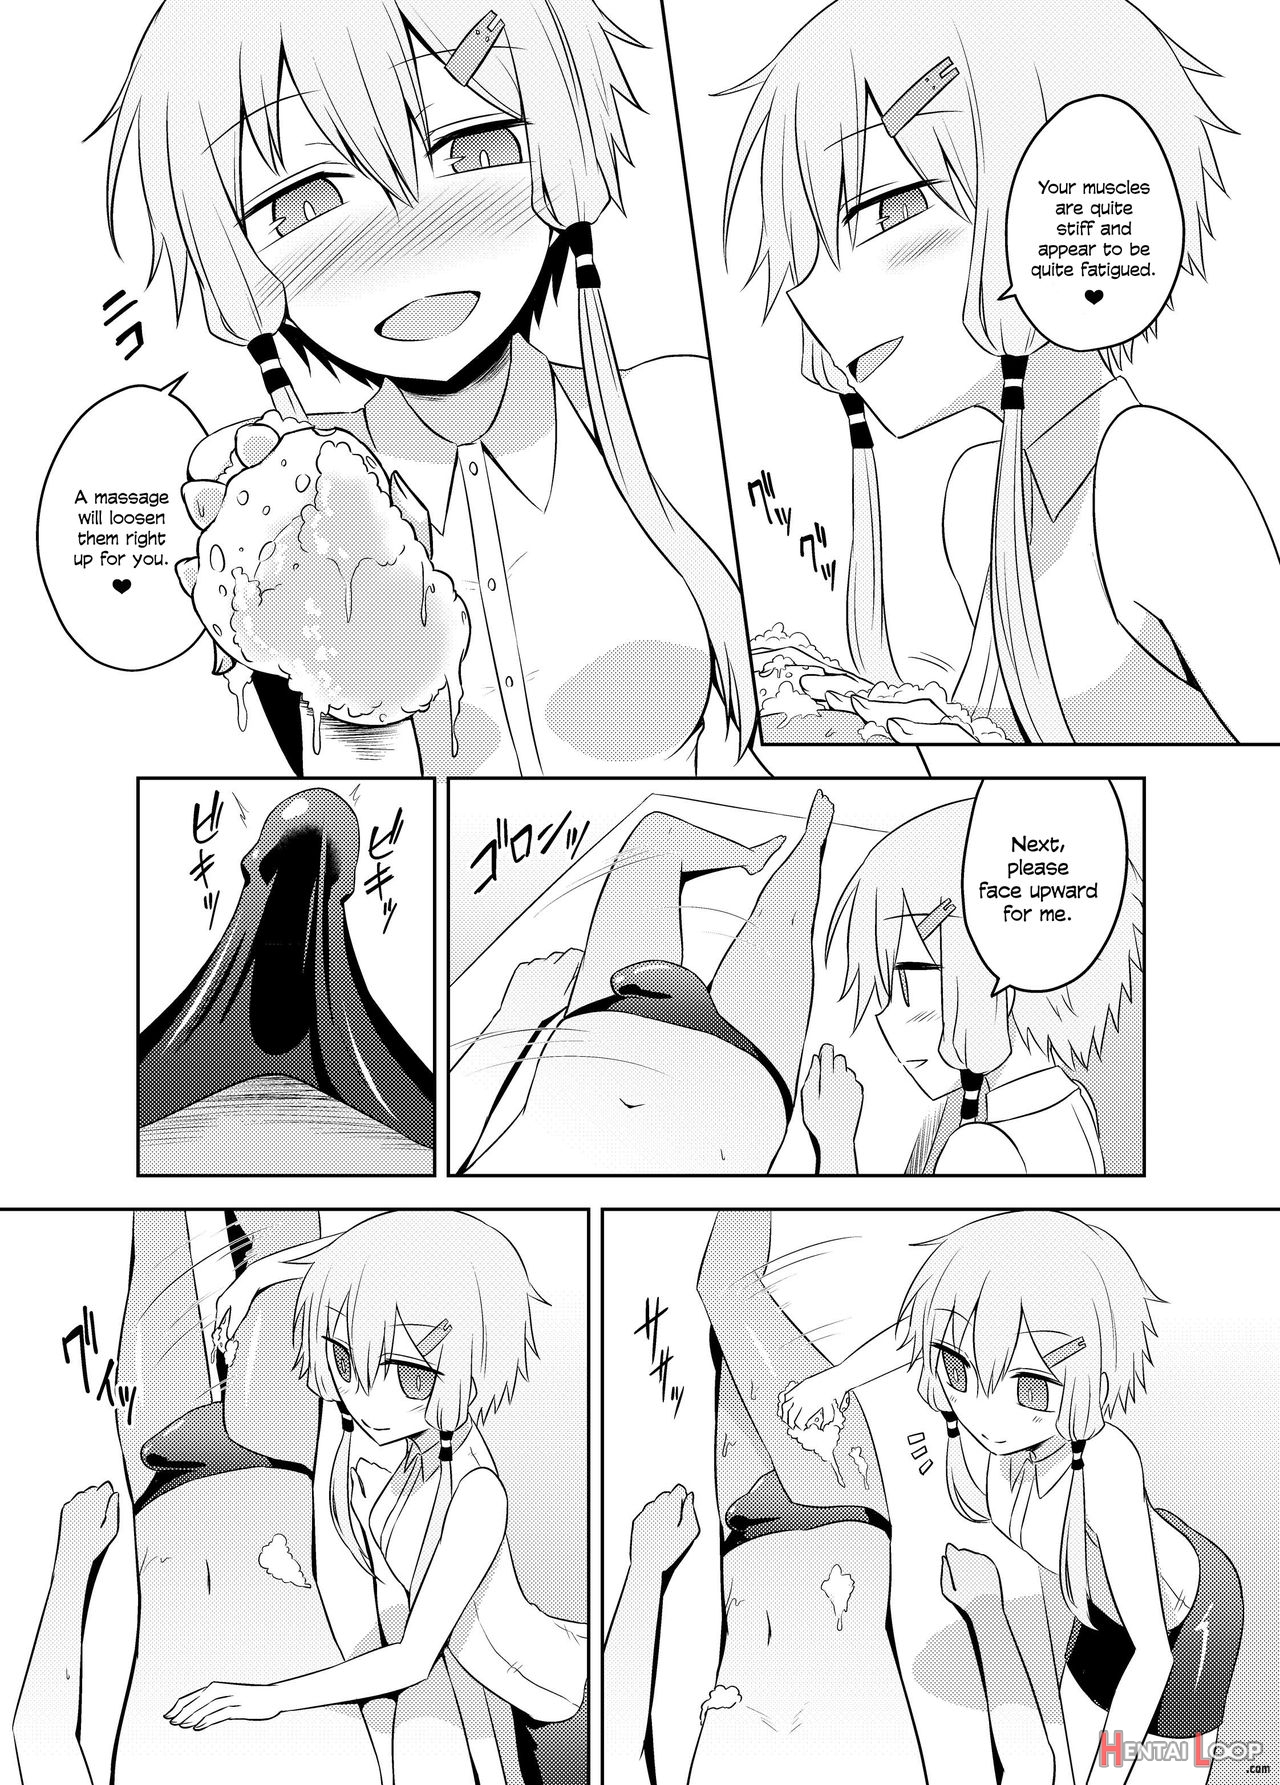 Yukari-san Seems To Be Continuing Her Body Washing Service! page 7